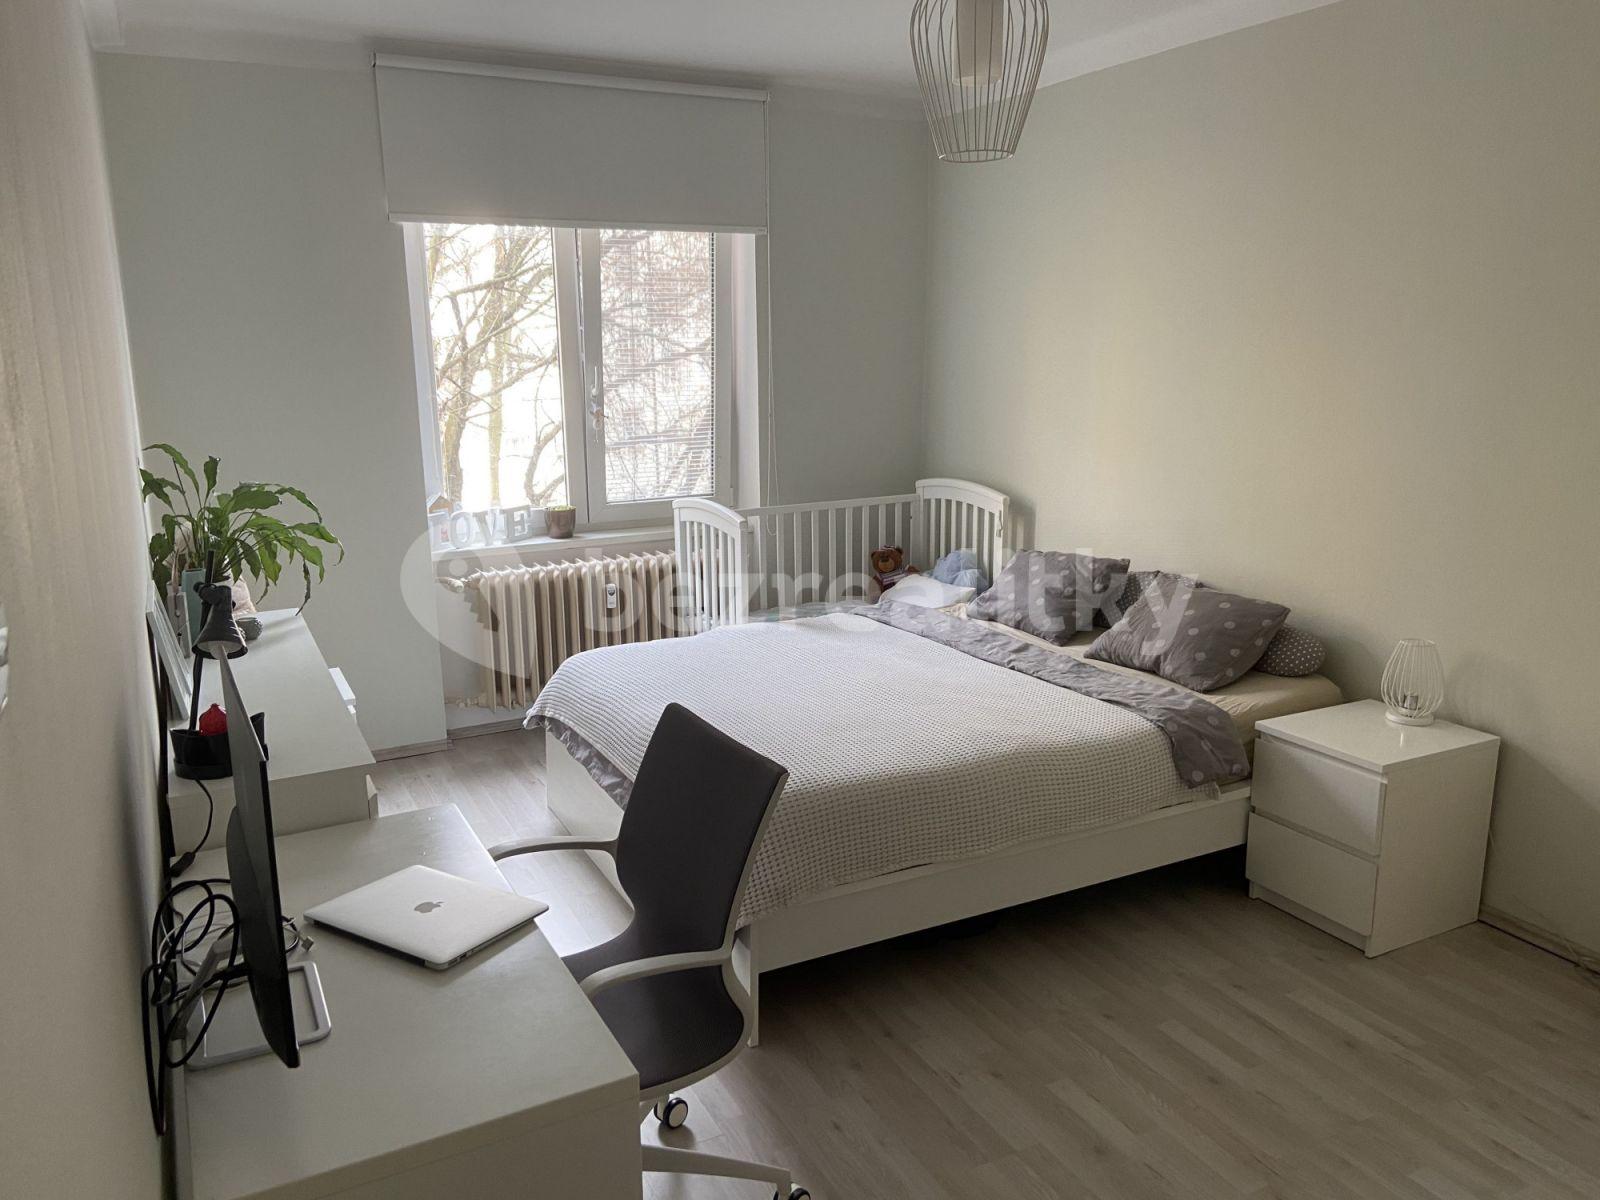 2 bedroom flat to rent, 68 m², Lounských, Prague, Prague